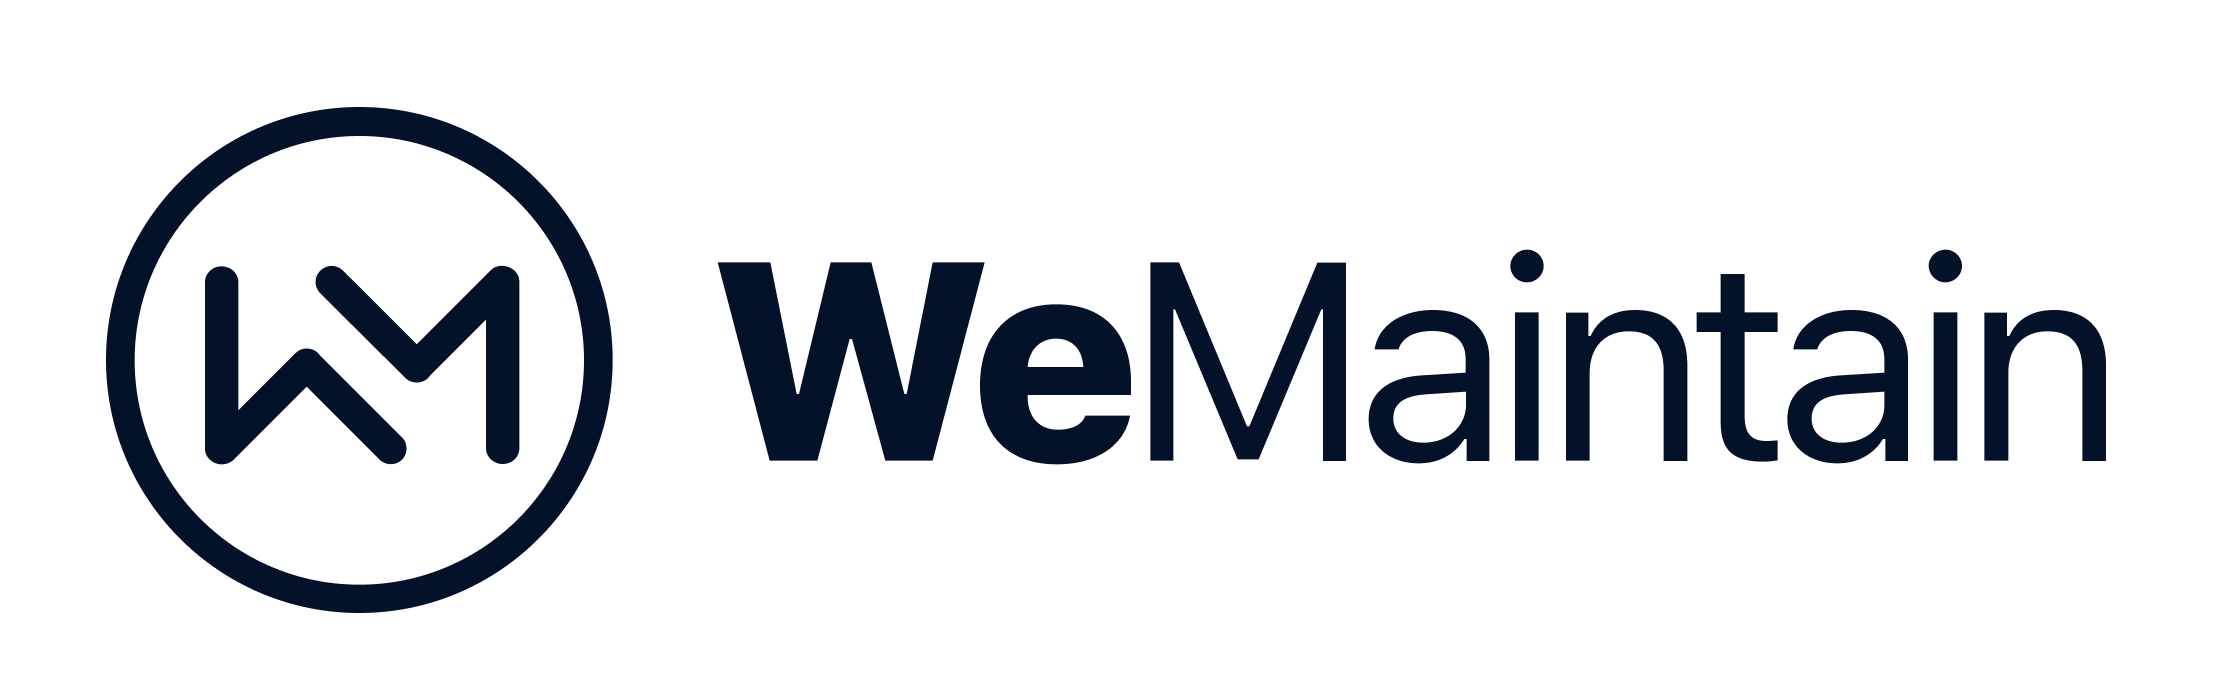 welmaintain logo.png